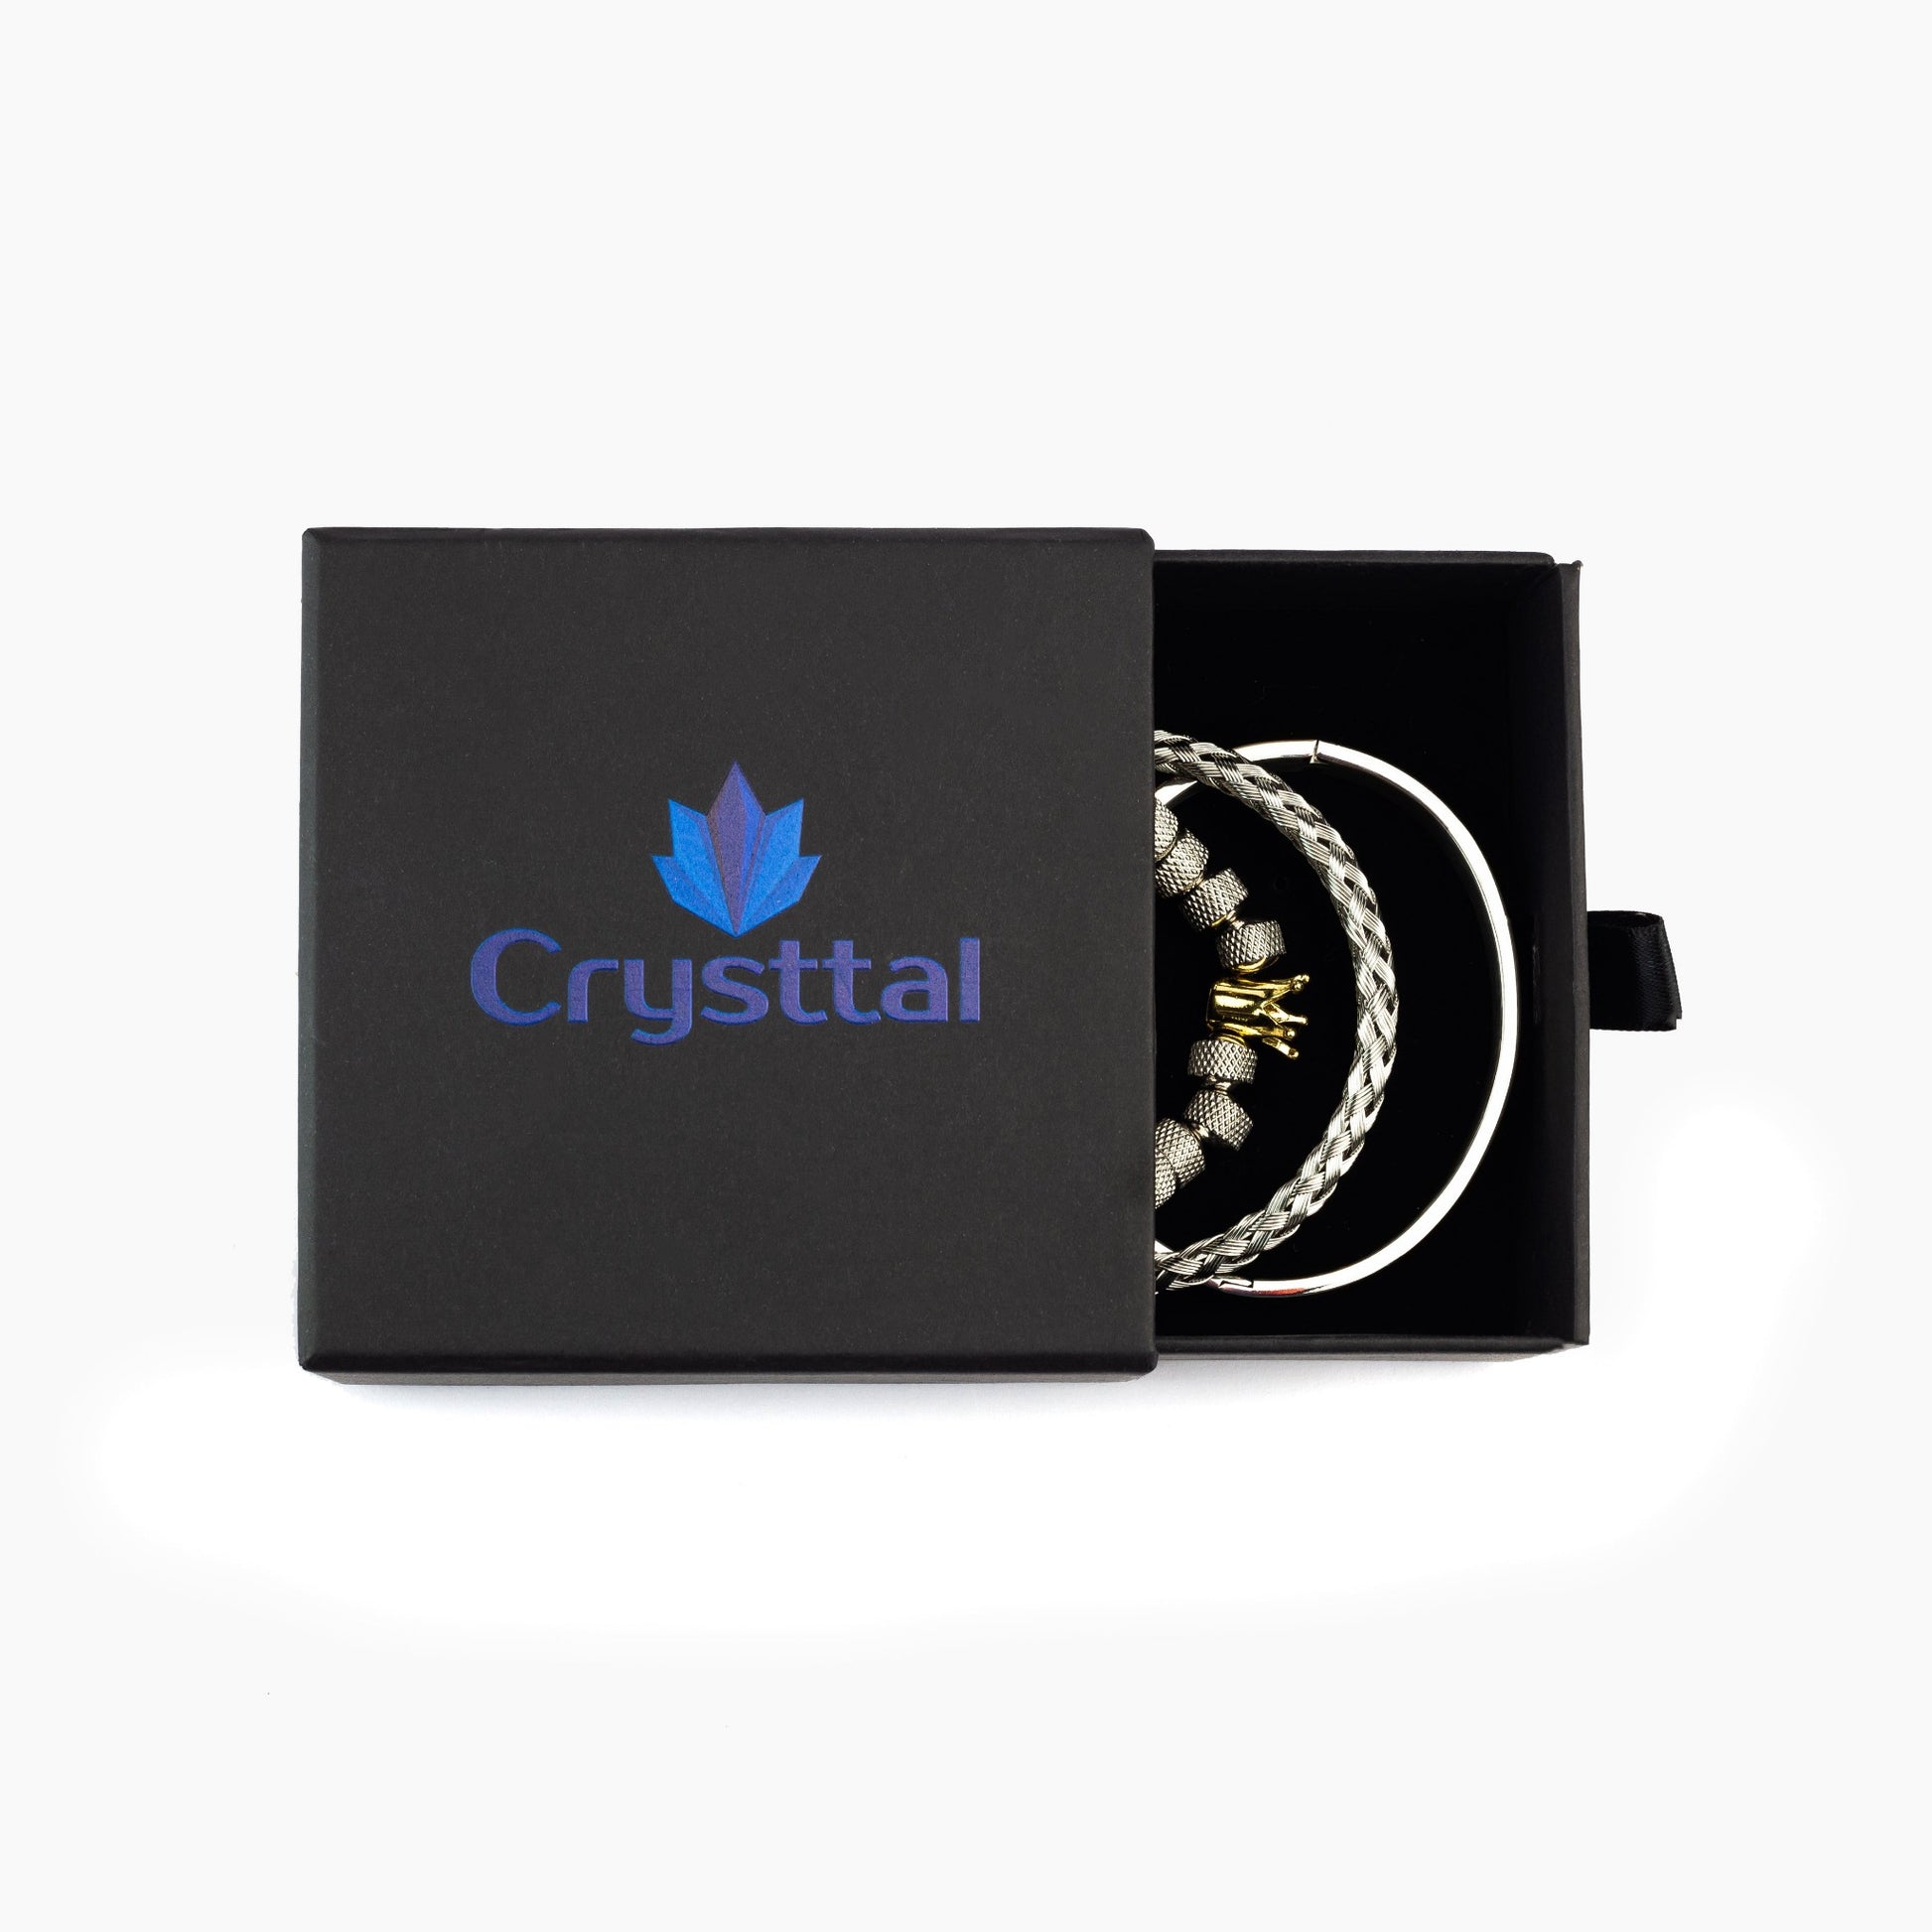 Roman Royal King Bracelet Set in a Crysttal branded gift box